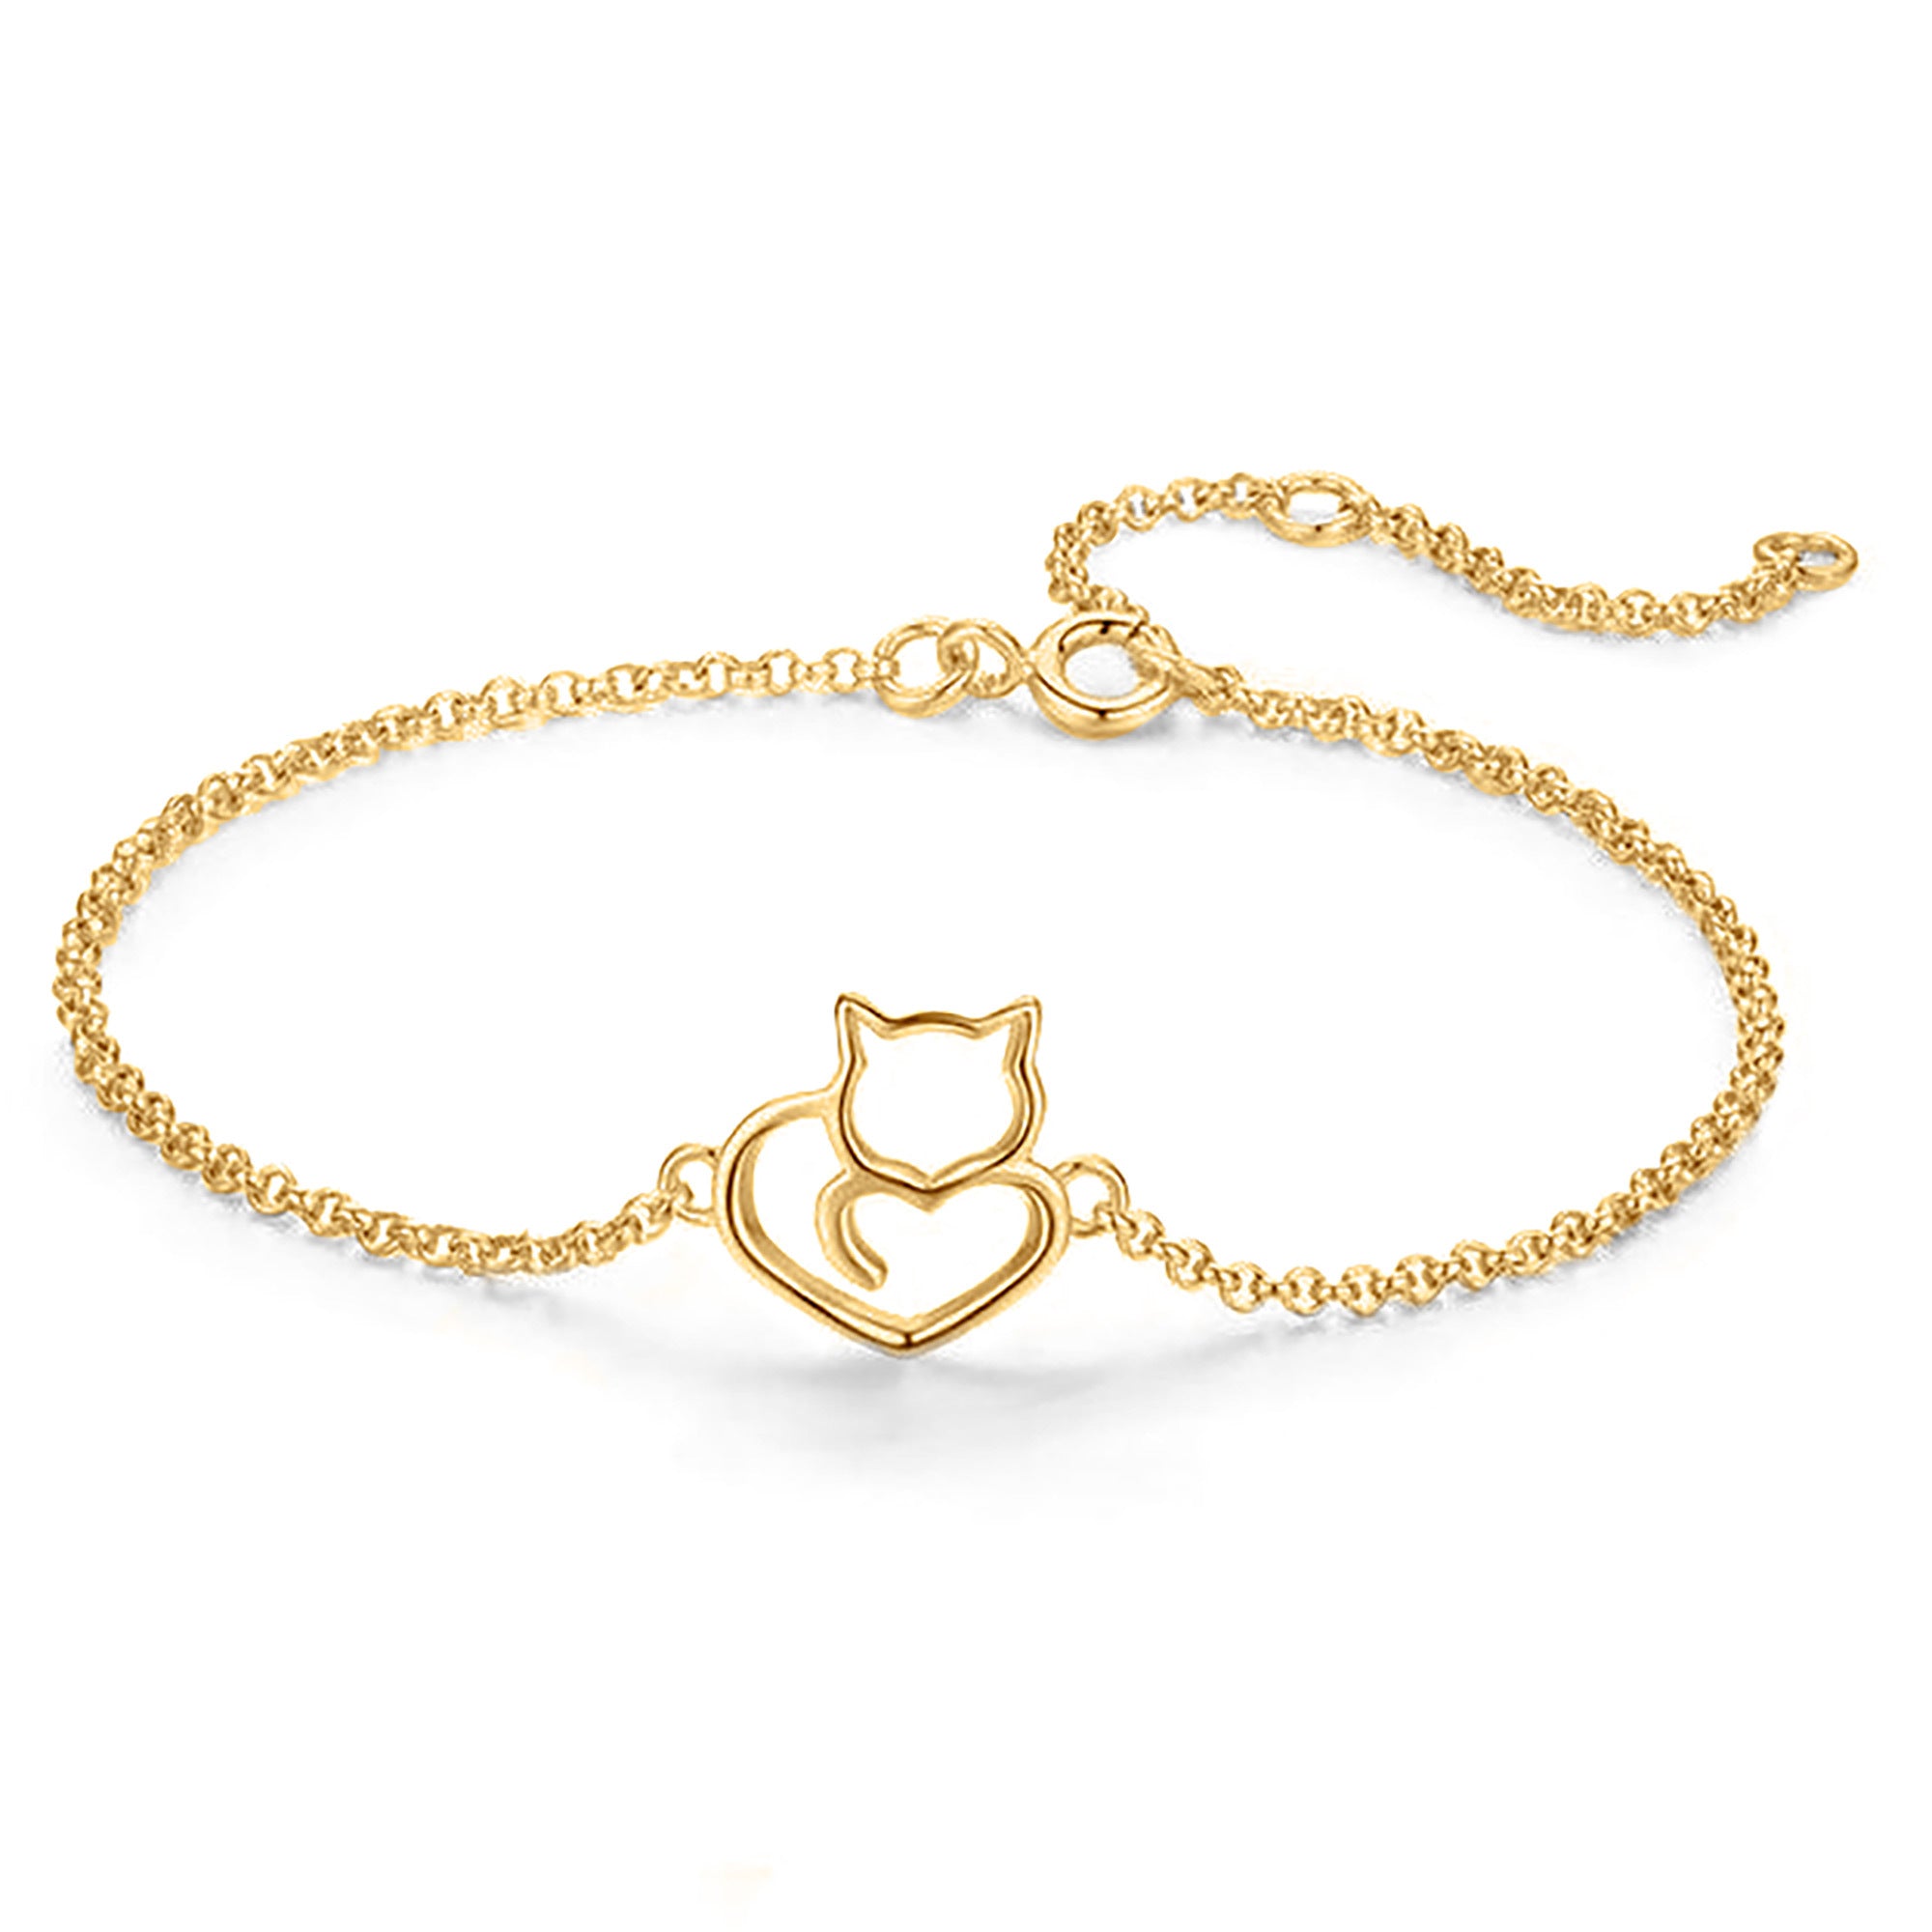 Cat Bracelets and Cat Jewelry